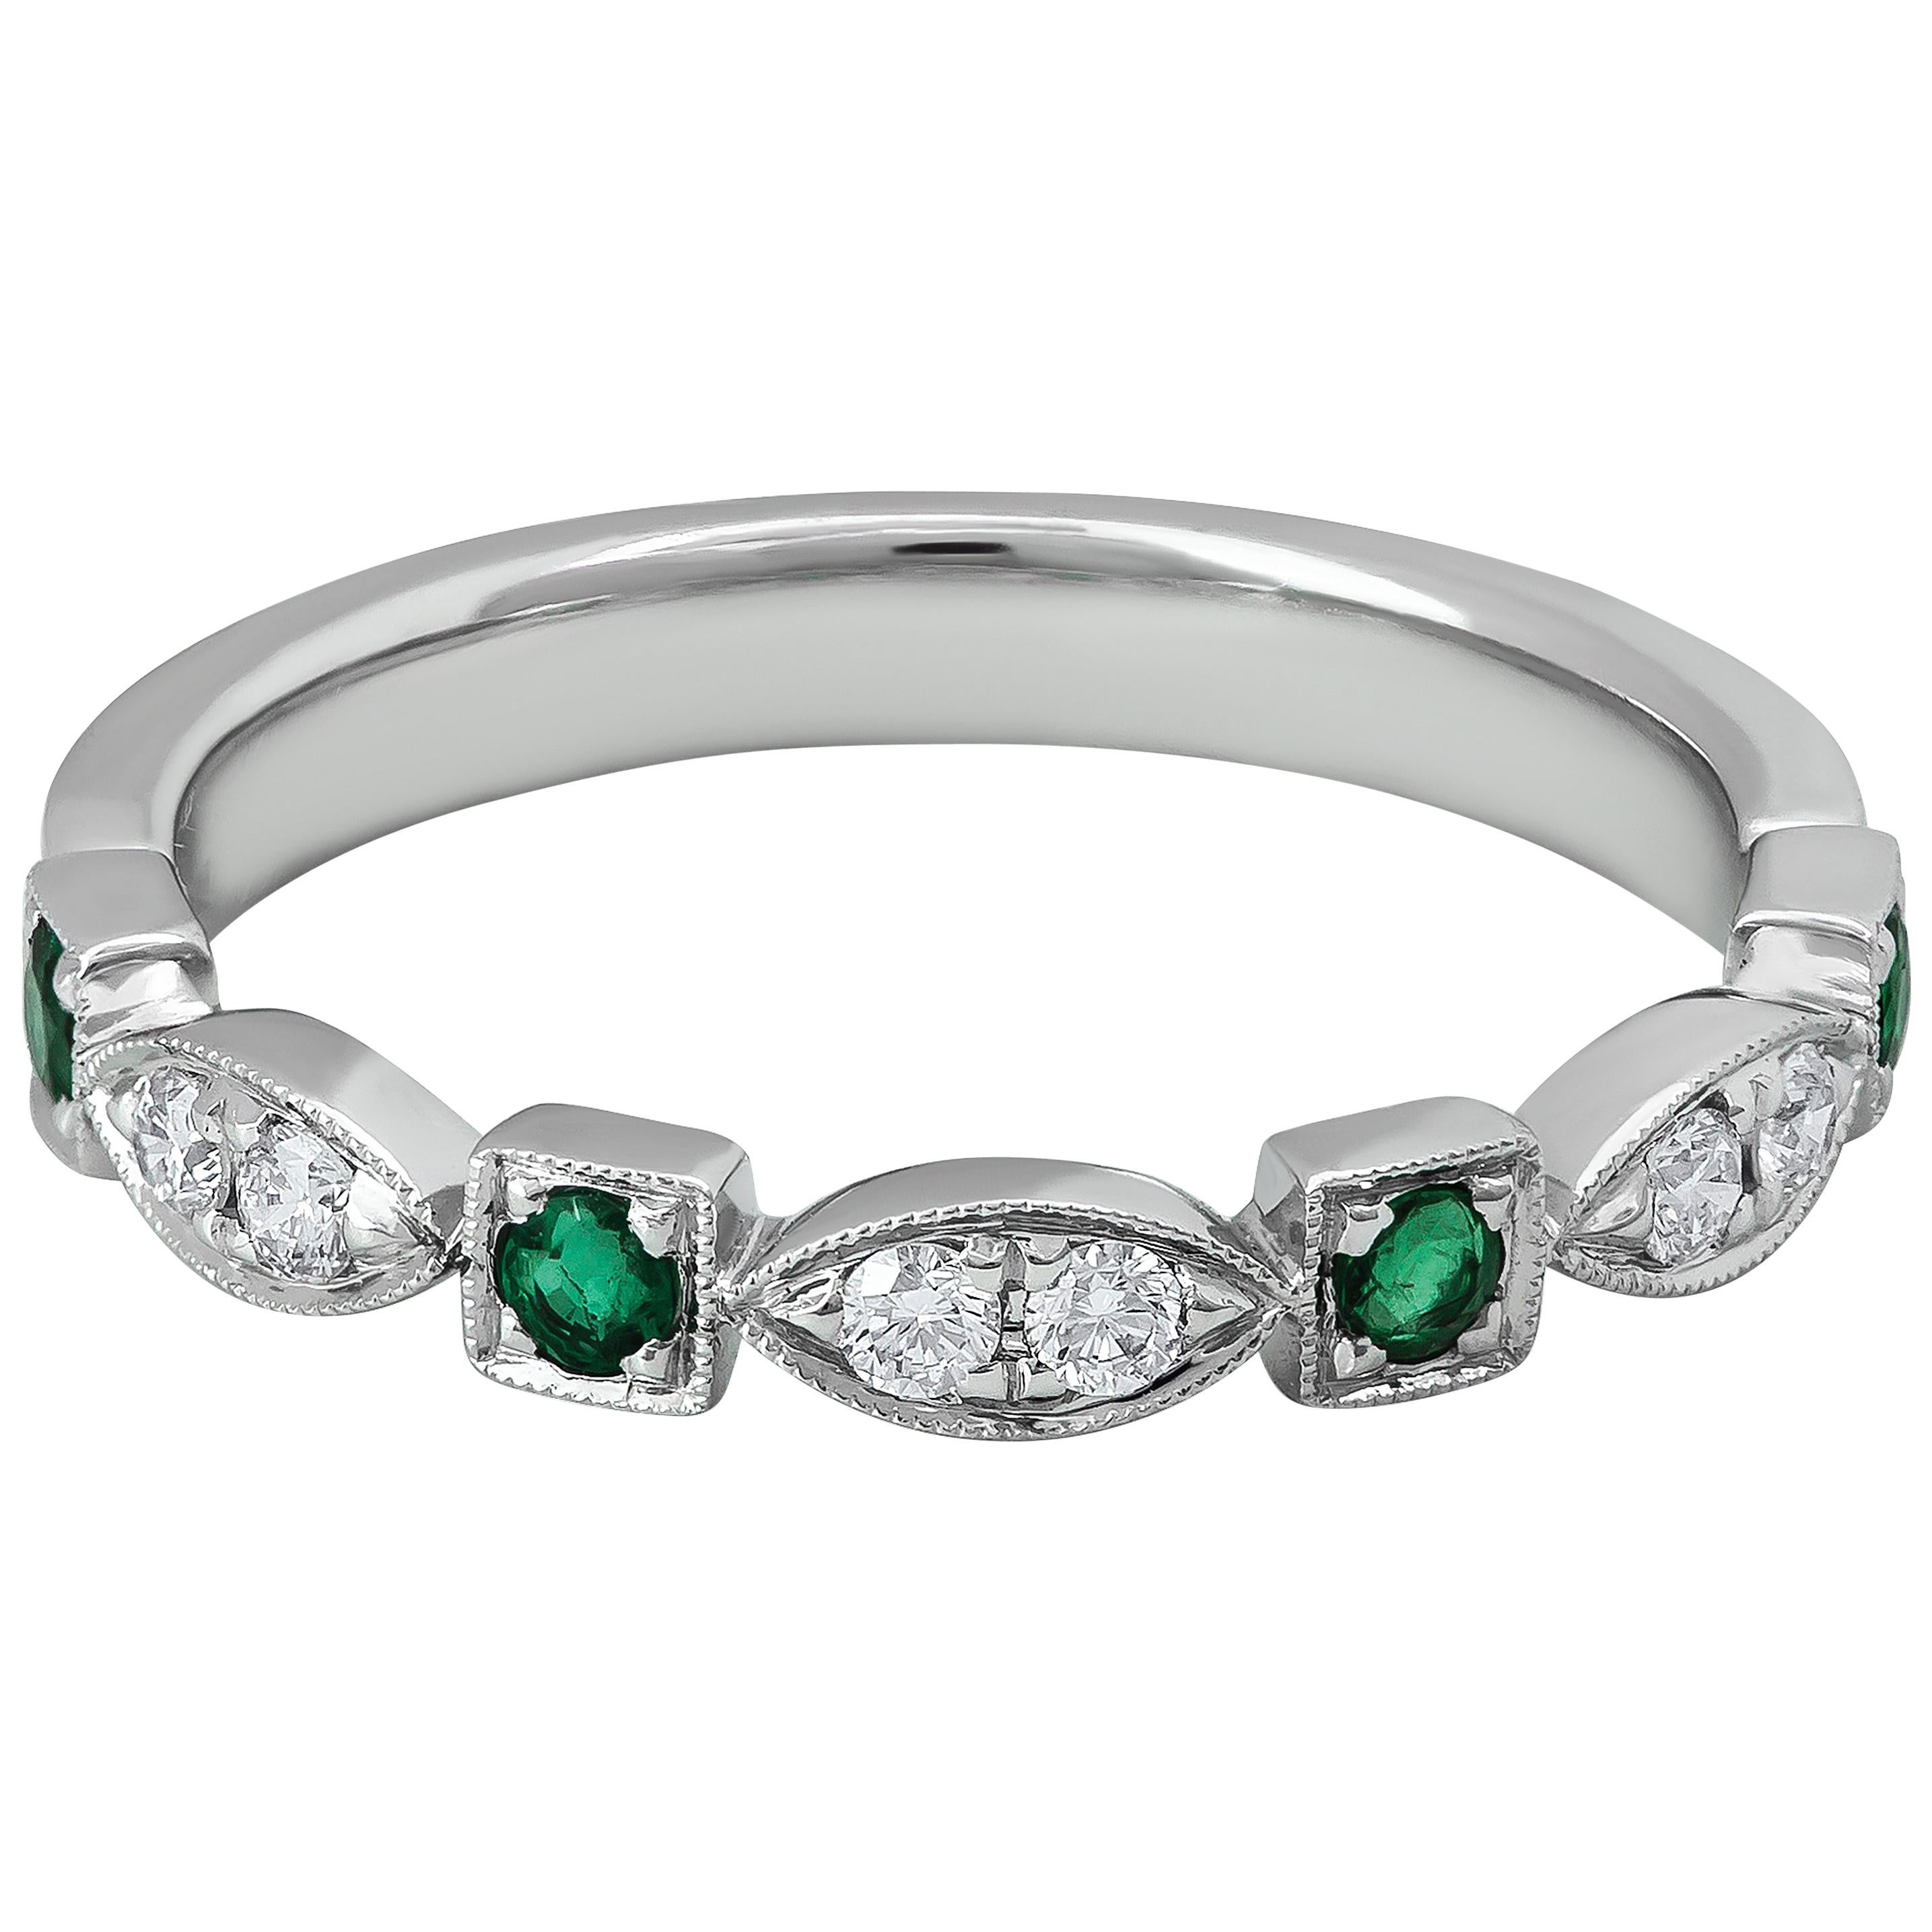 Roman Malakov Antique Style Emerald and Diamond Wedding Band